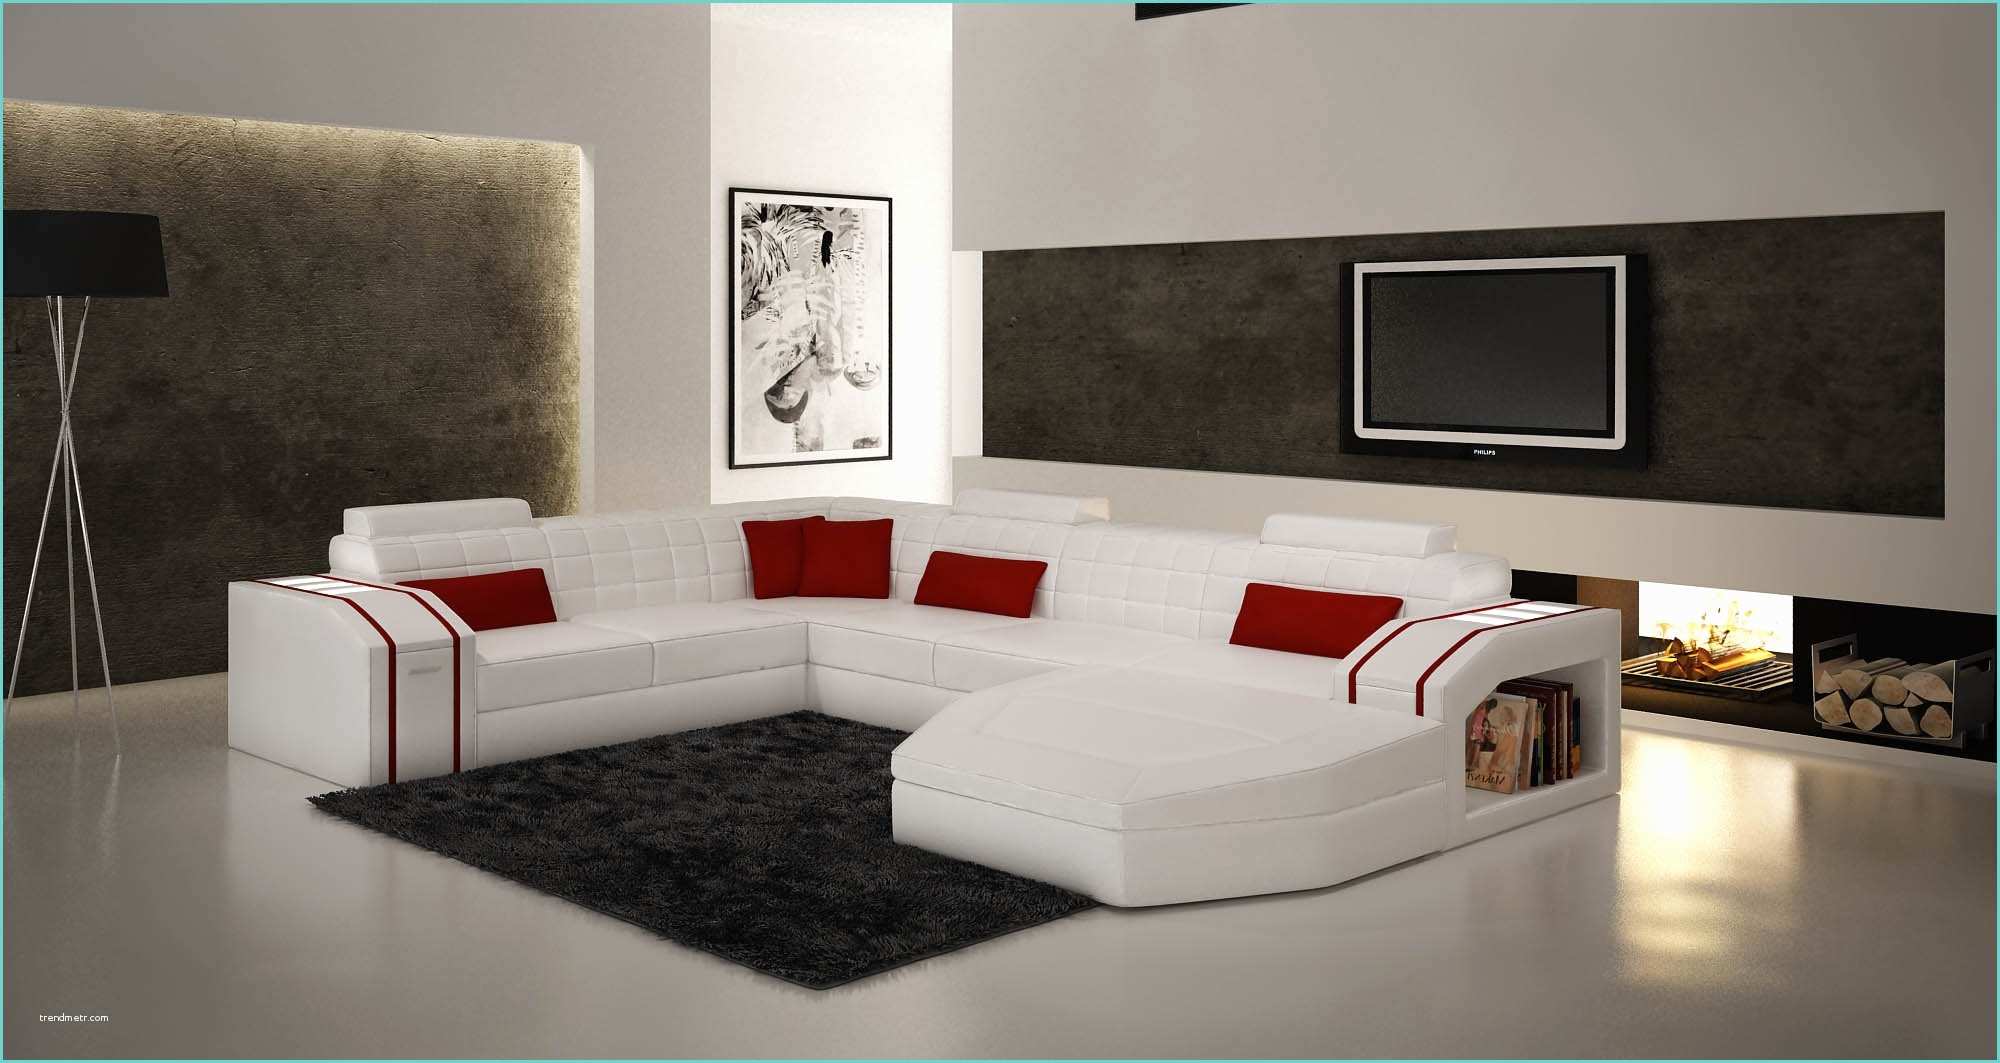 Chambre Fushia Et Blanc Chambre Blanc Et Fushia Affordable Deco Chambre Marron Et